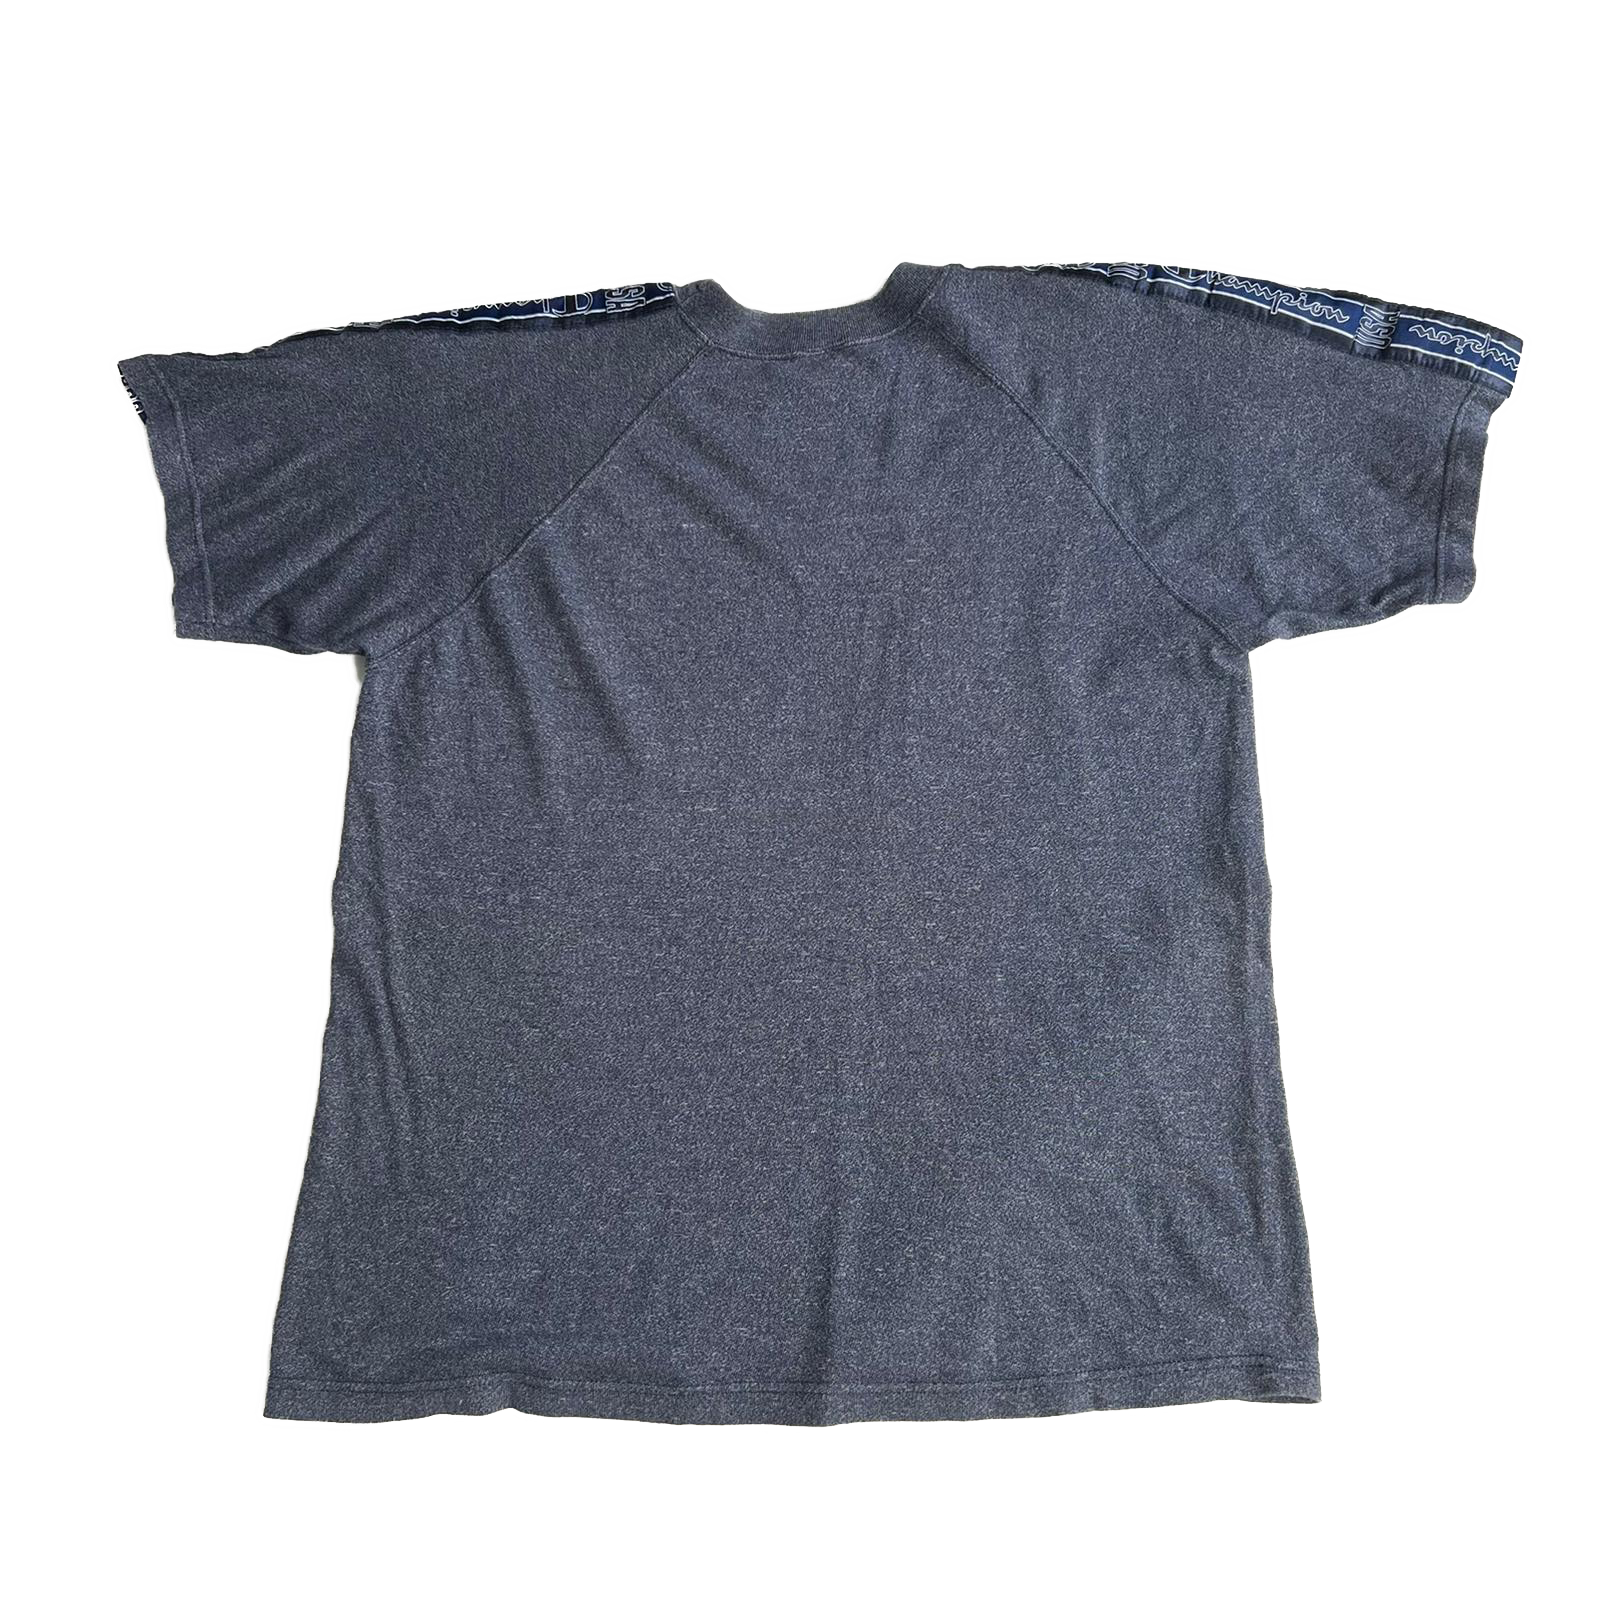 90's Champion t-shirt